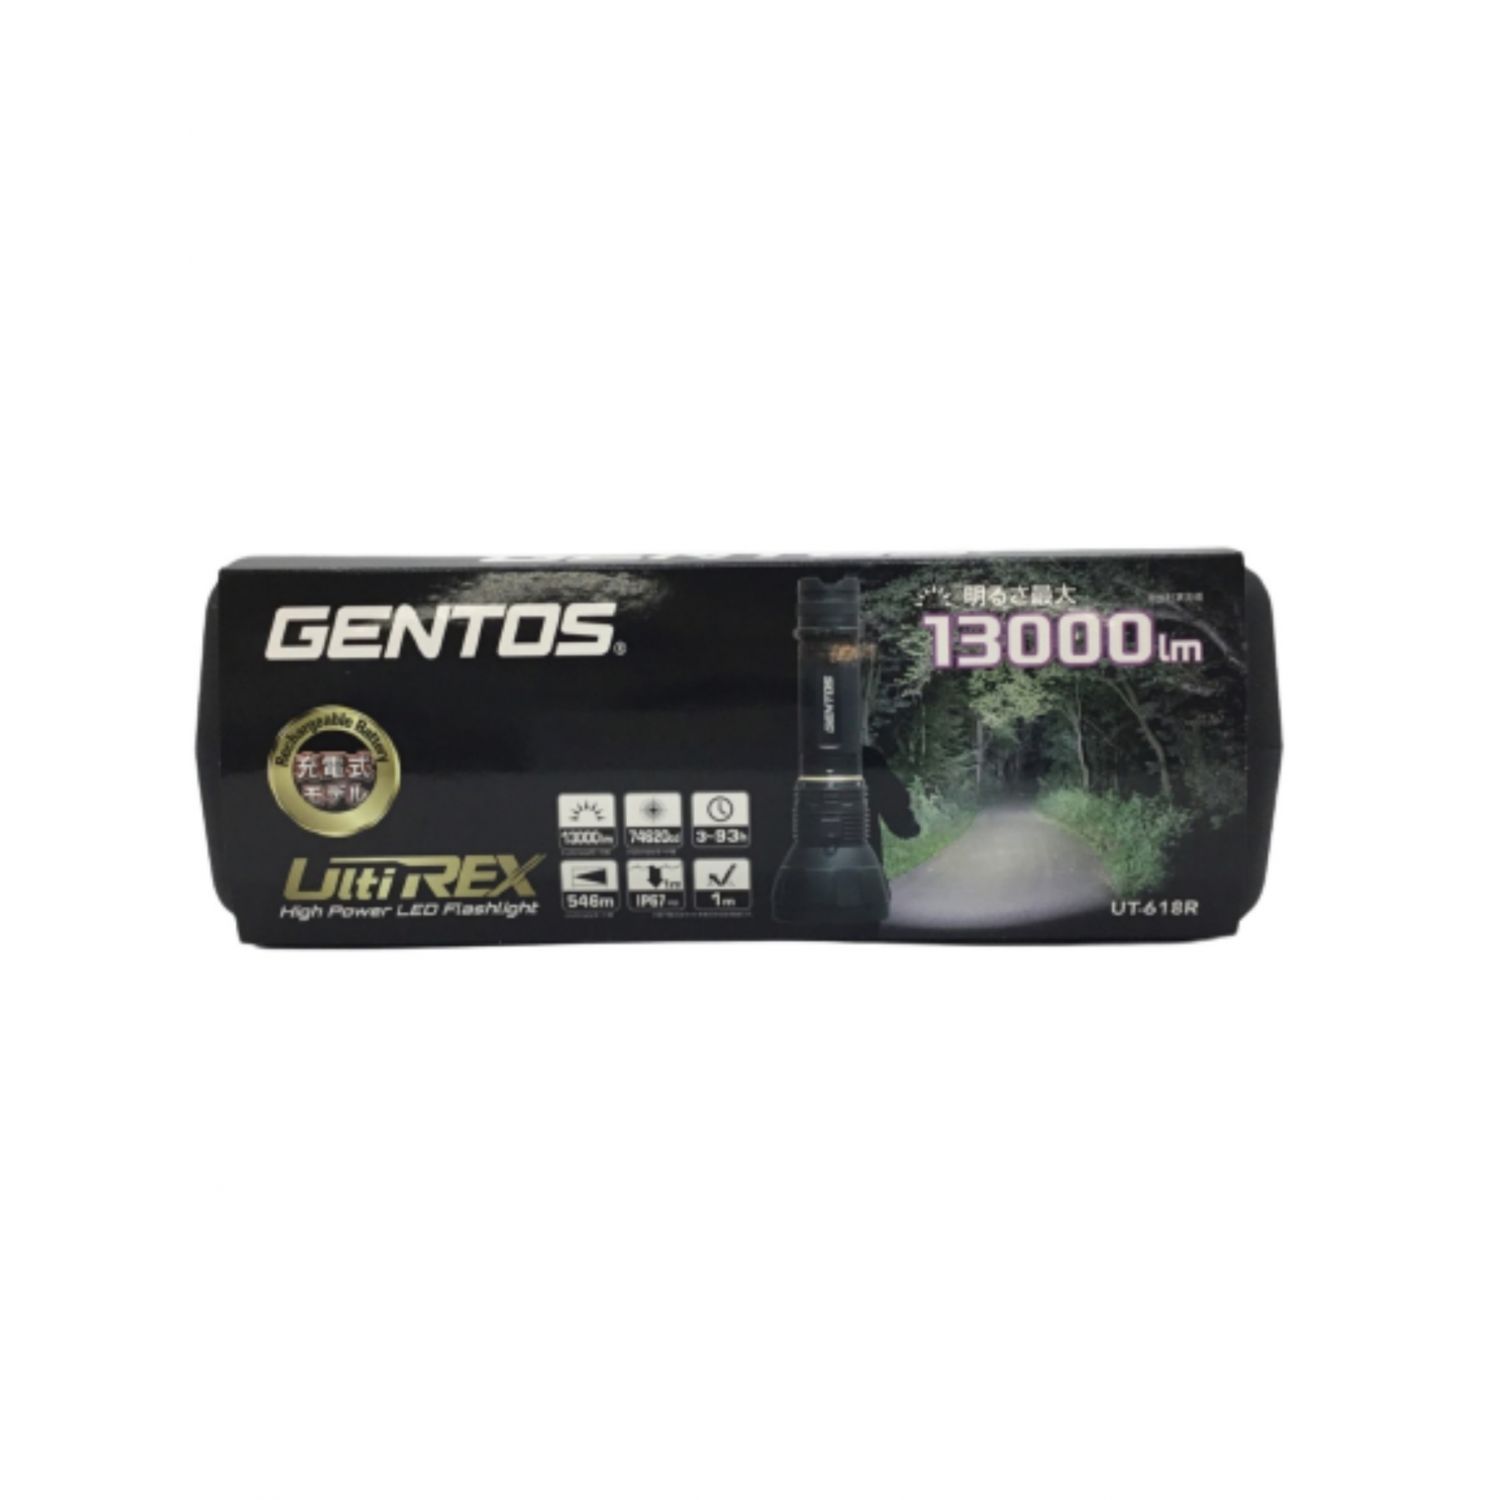 GENTOS 充電式高出力LEDライト “UT-618R” UT618R - 5